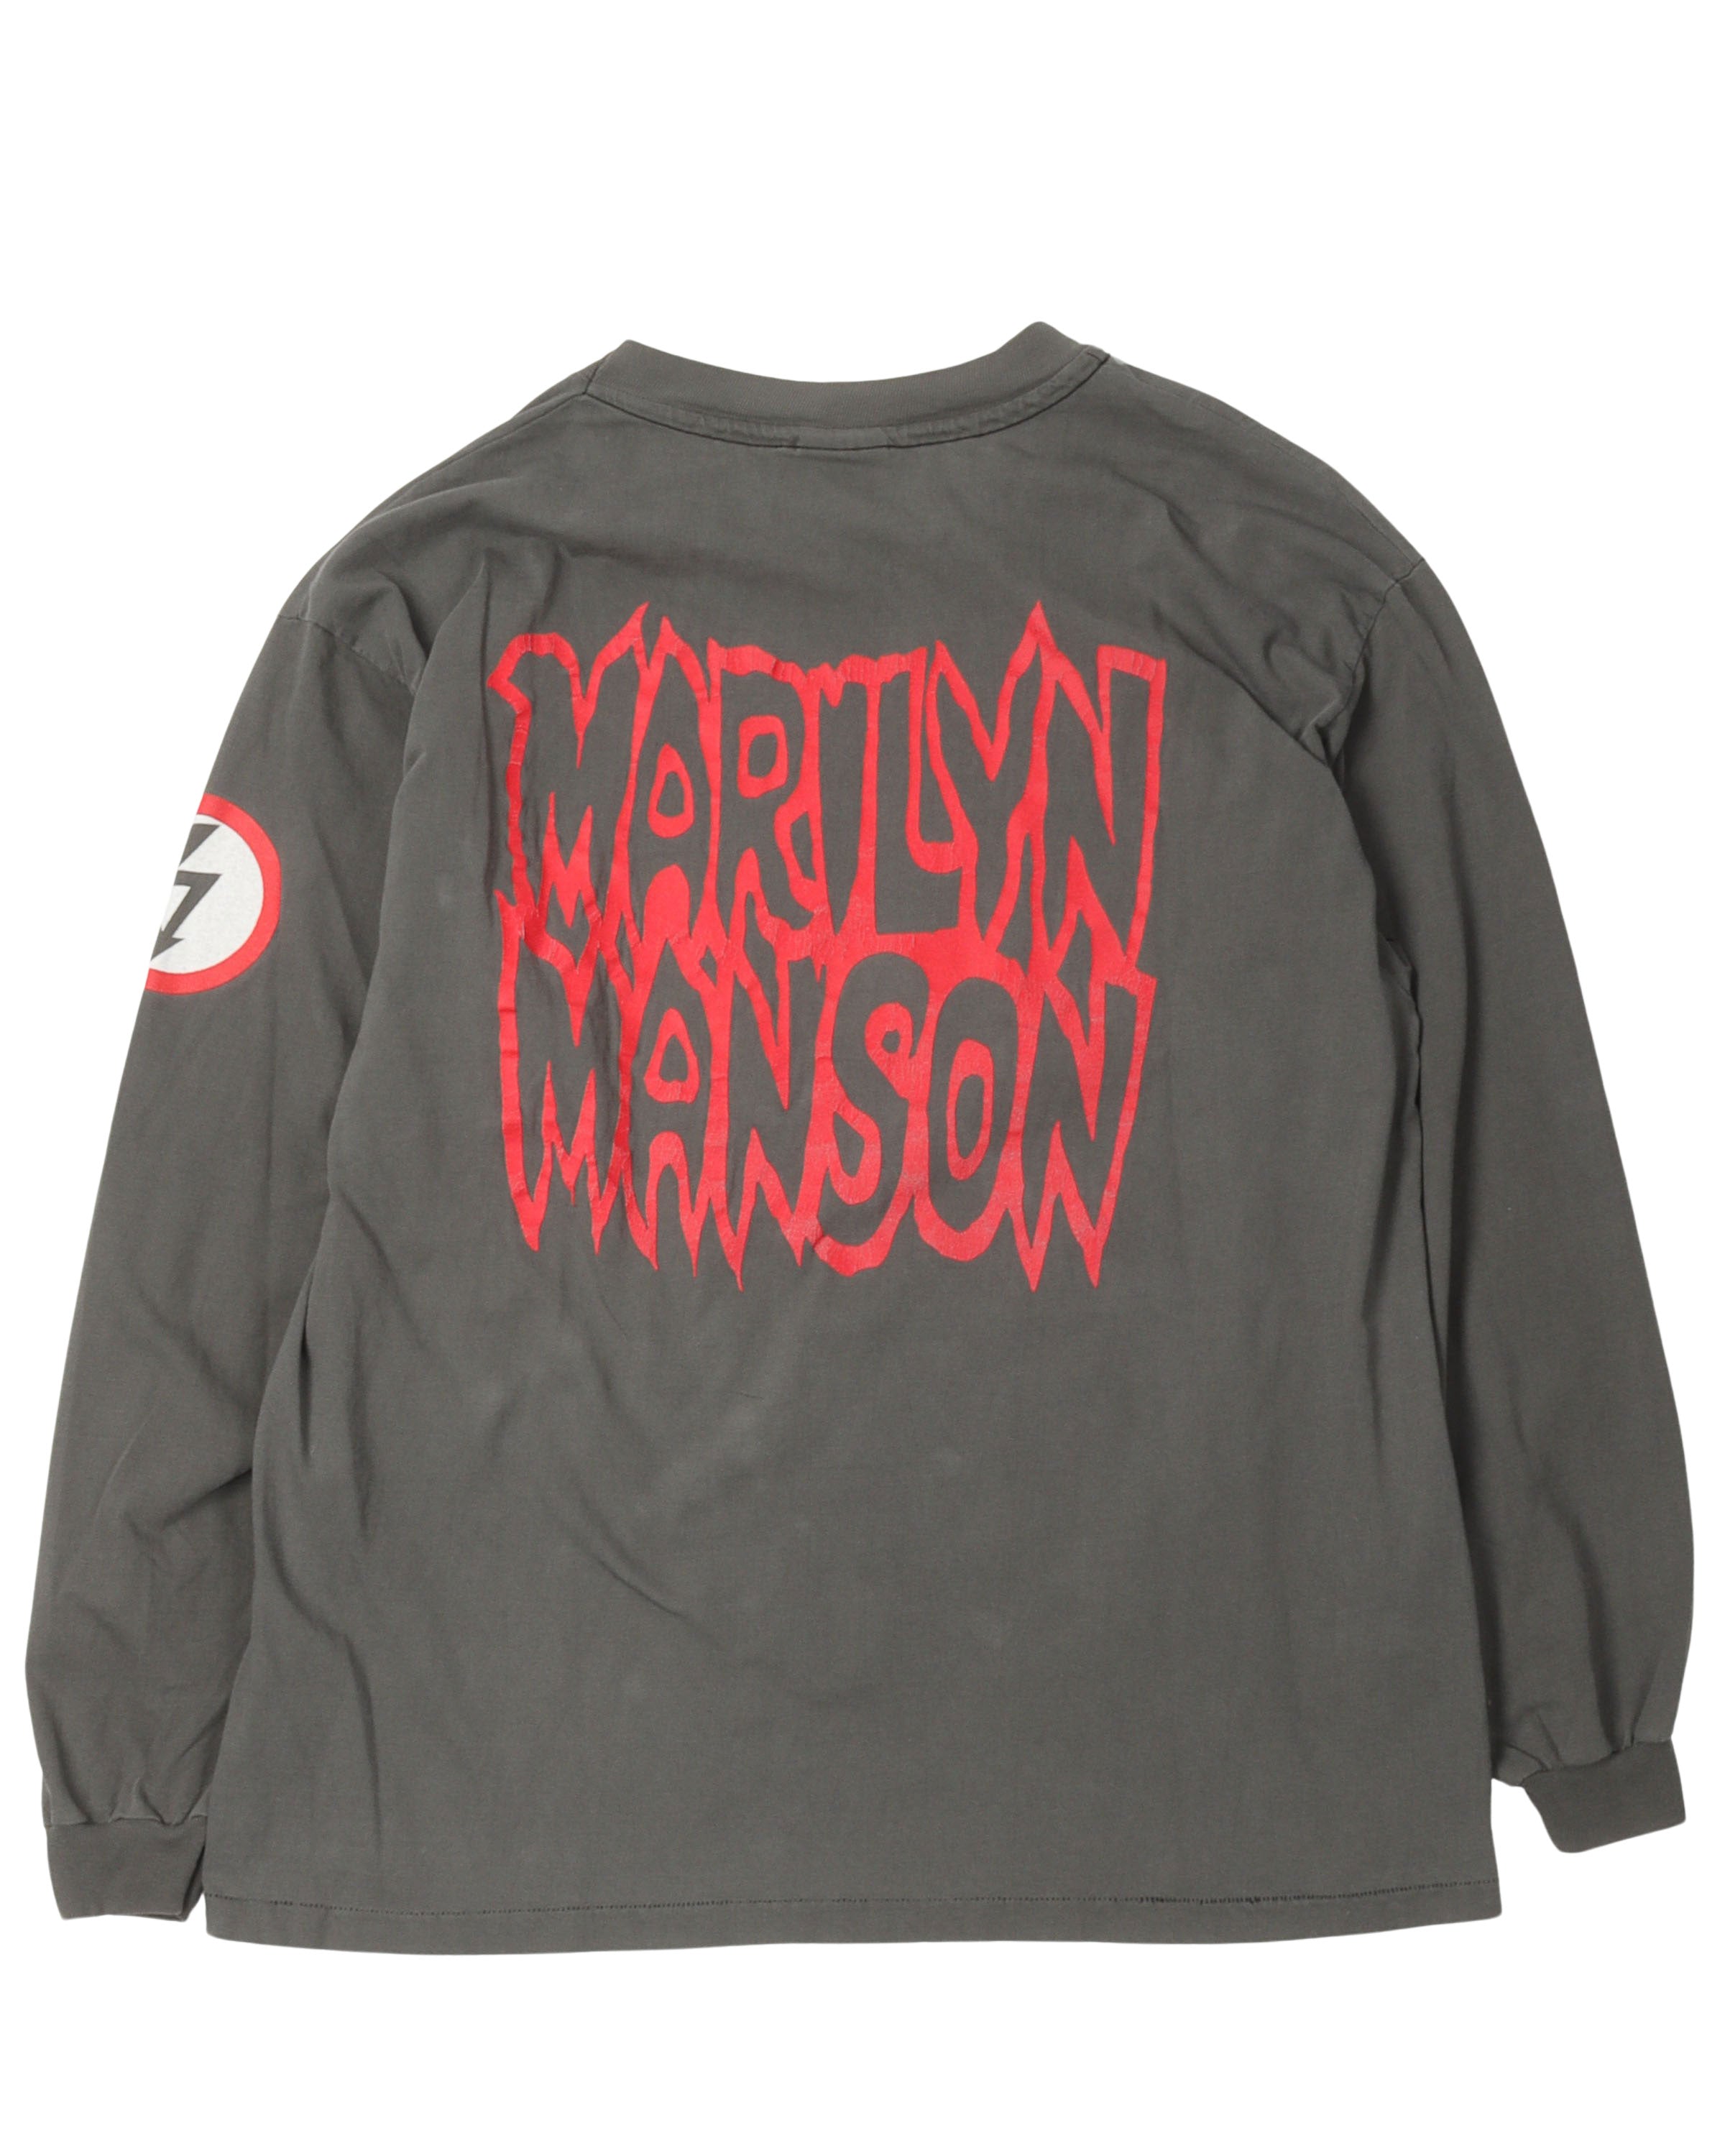 Marilyn Manson Satanic Army Long Sleeve T-Shirt